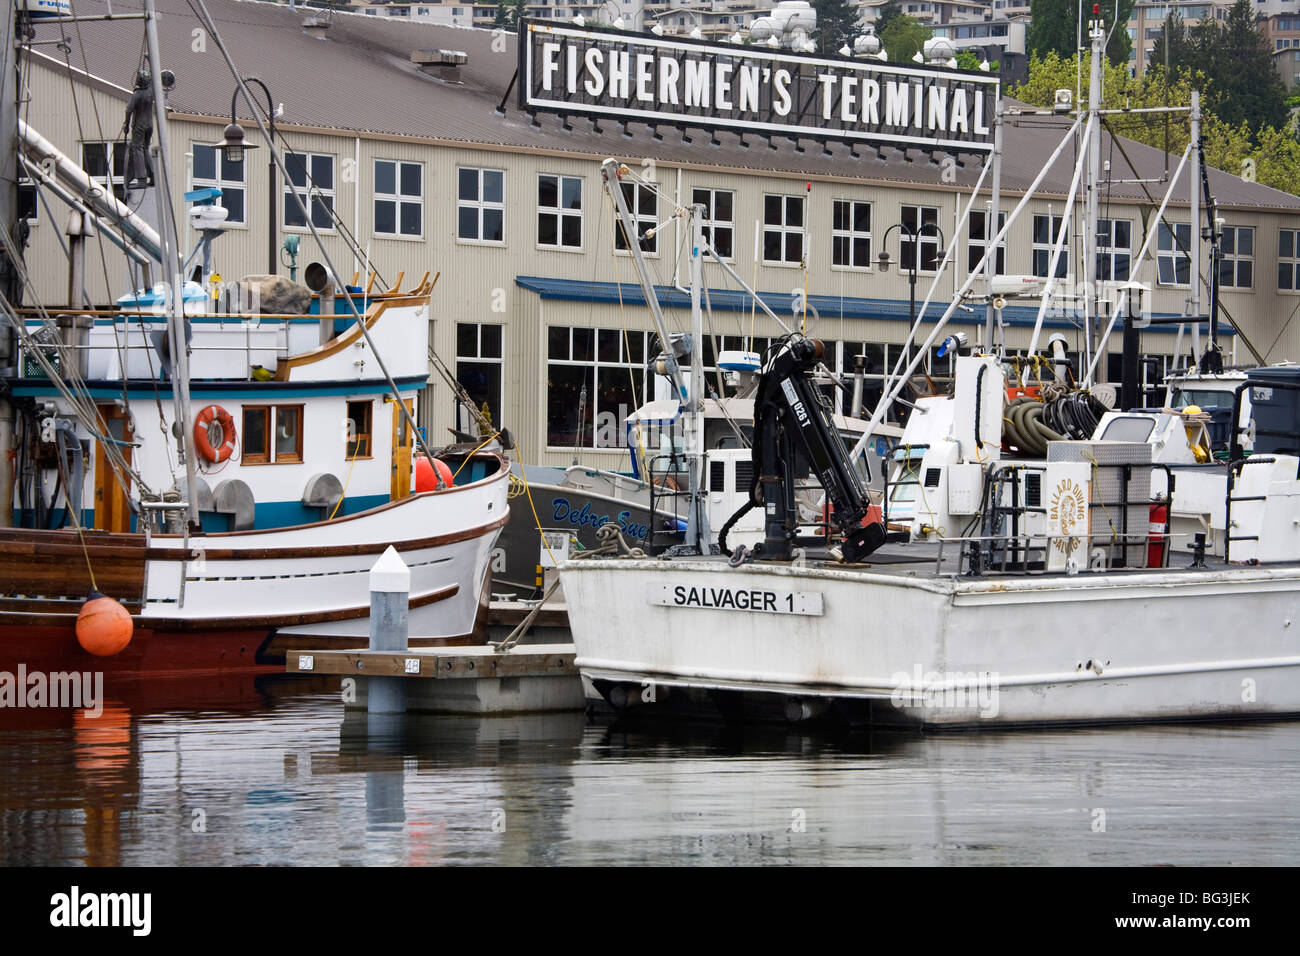 Fishermen's Terminal, Seattle, Washington State, United States of America, North America Stock Photo